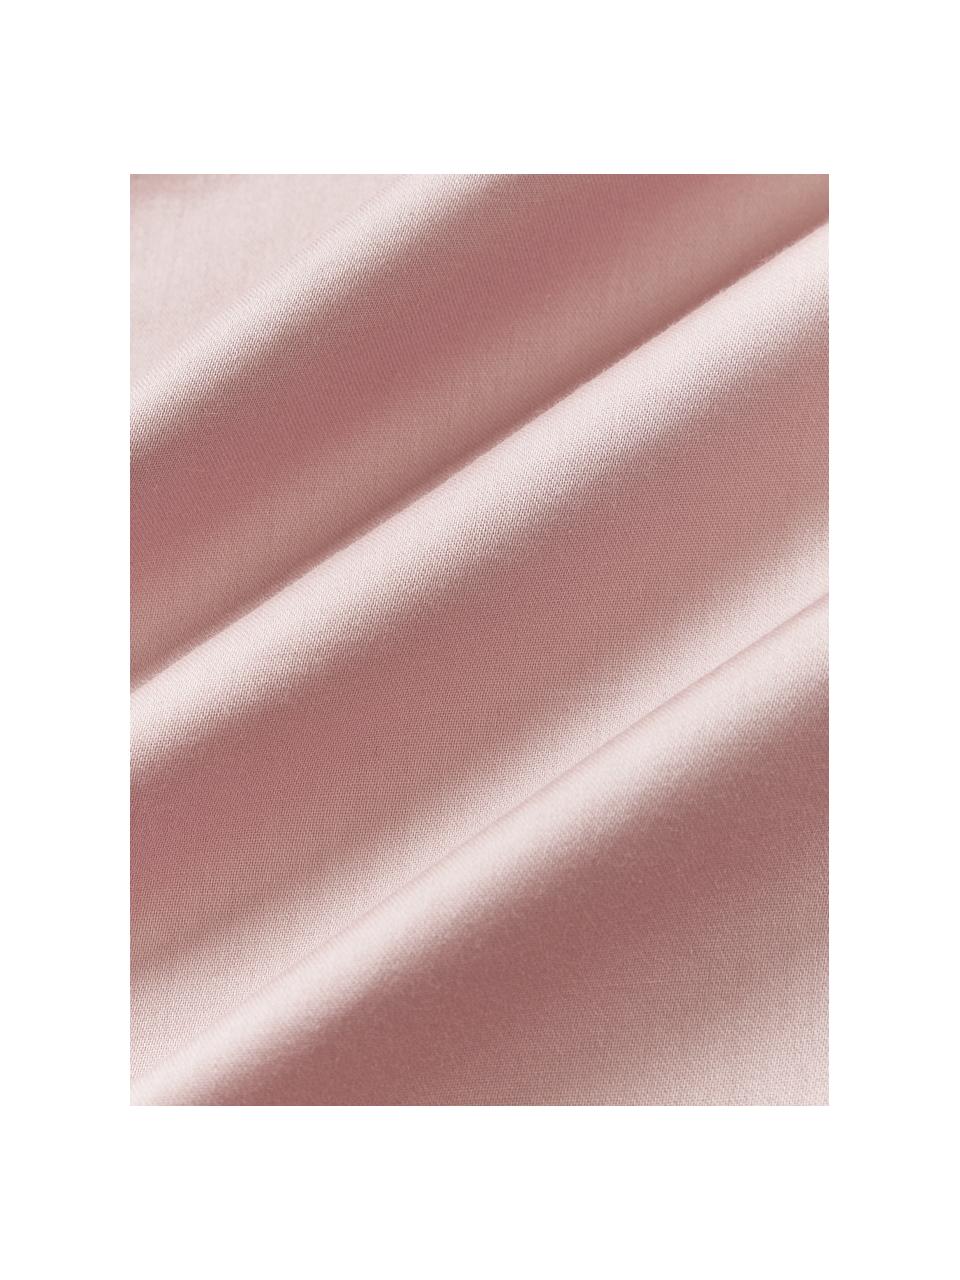 Baumwollsatin-Bettdeckenbezug Comfort, Webart: Satin Fadendichte 250 TC,, Rosa, B 200 x L 200 cm